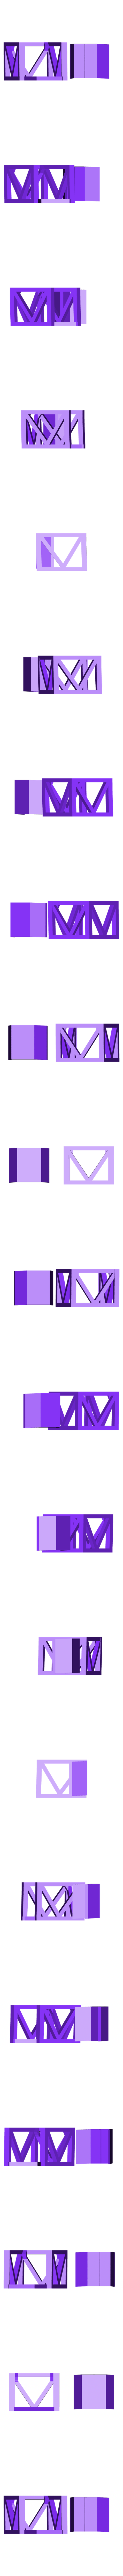 End_cap_for_half-bridge.stl Download free STL file Led bridge lamp Universal Segment • 3D printer object, Opossums